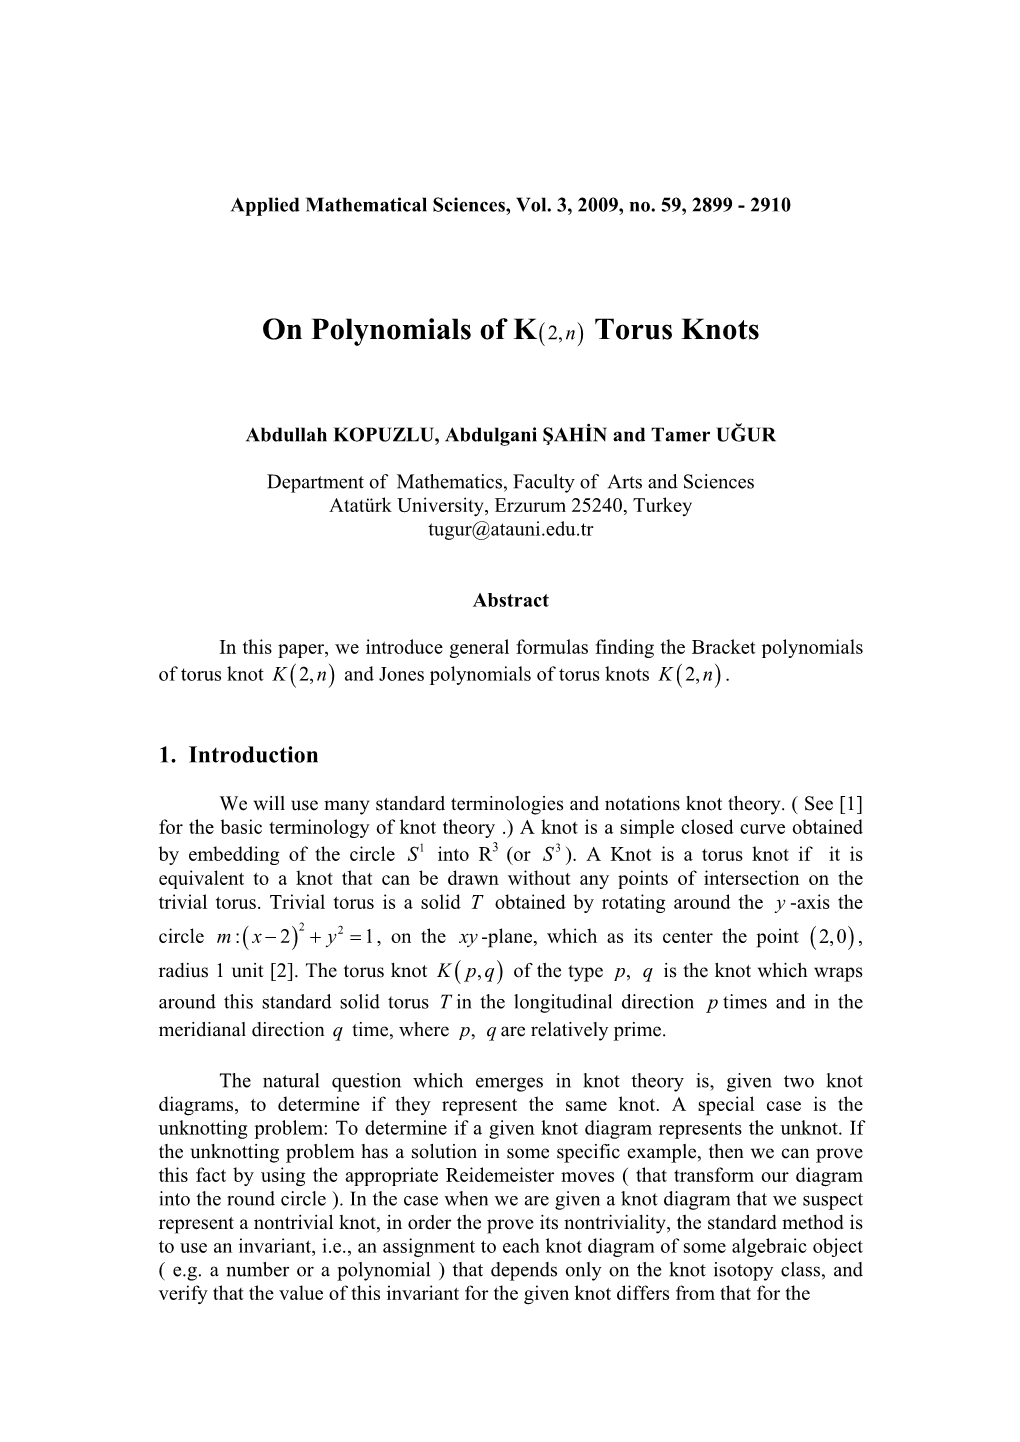 On Polynomials of K( ) 2,N Torus Knots